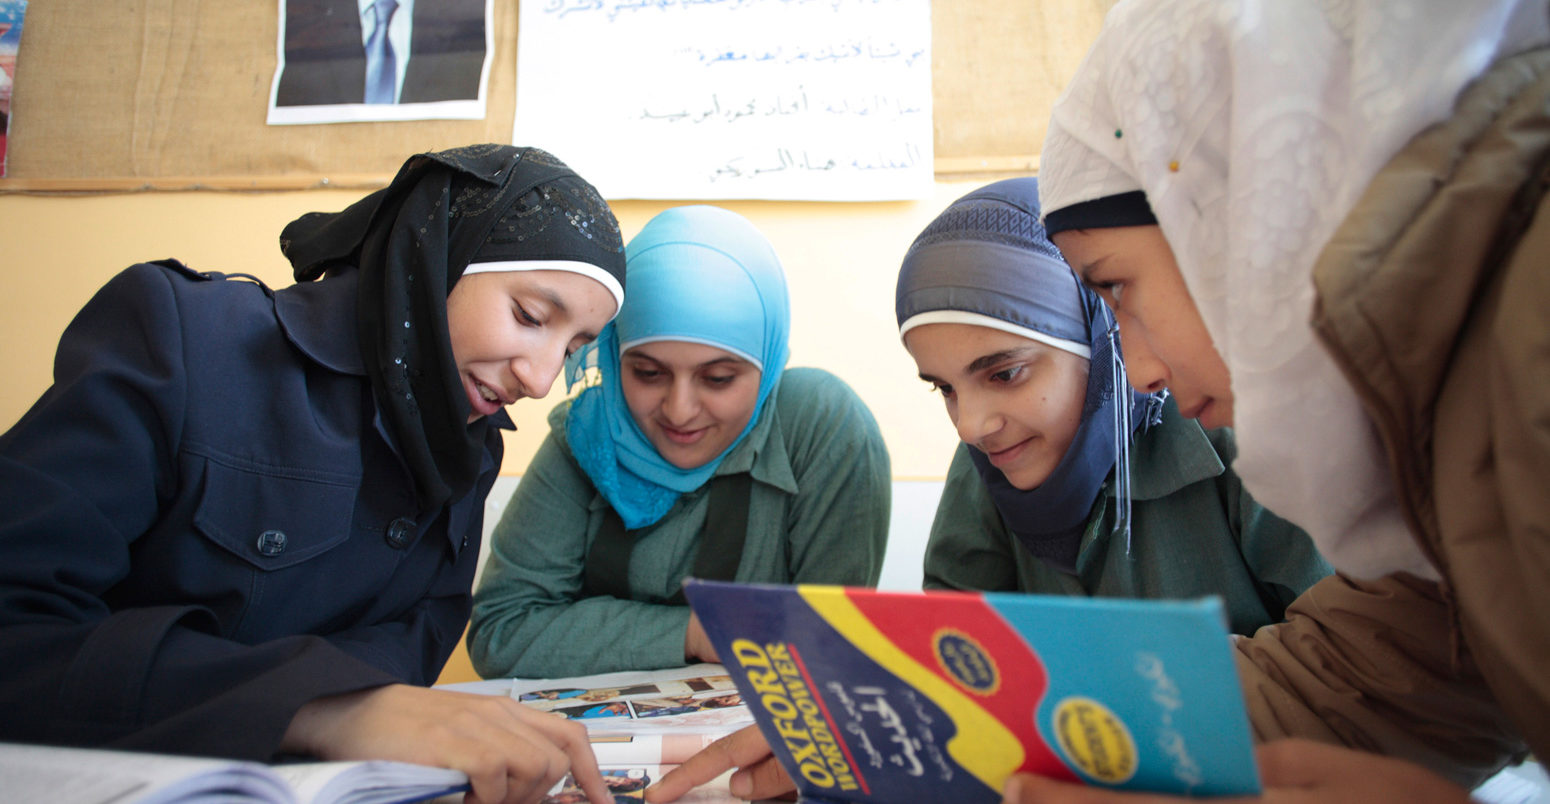 Students at english class. Madaba, Jordan. Credit: Thomas Imo / Alamy Stock Phot